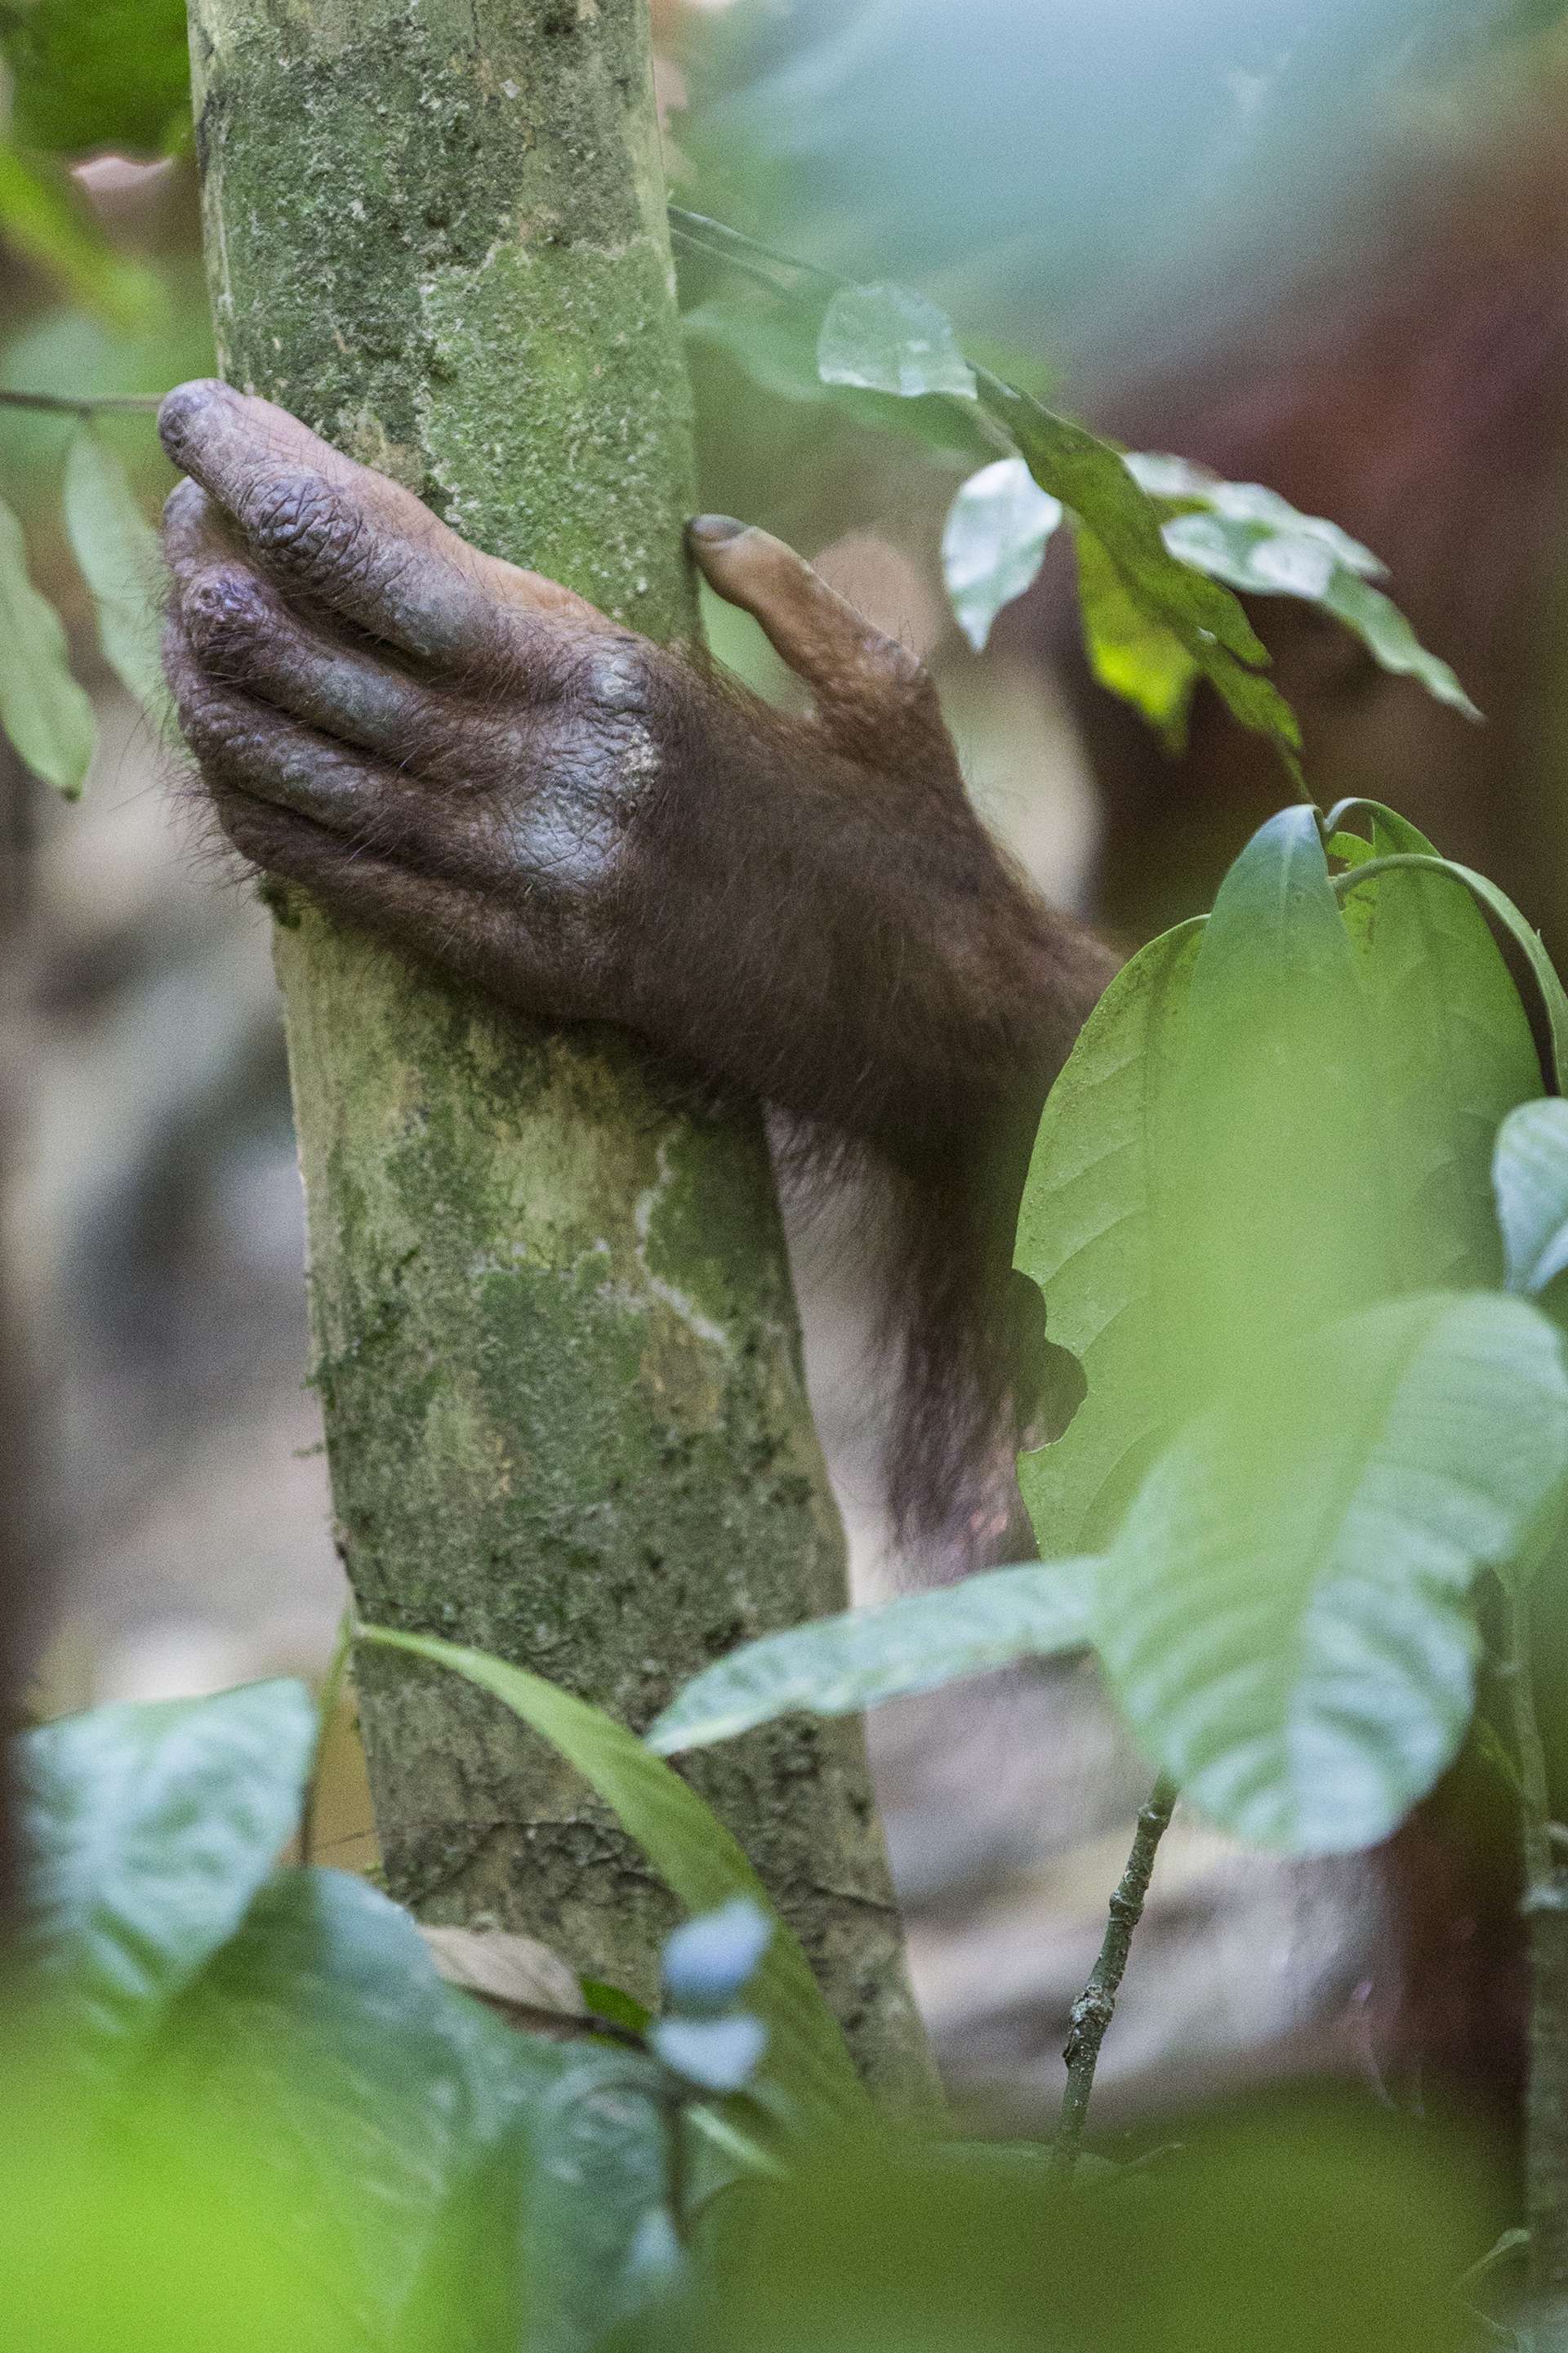 Photographie de Gilles Martin d'un orang-outan à Bornéo